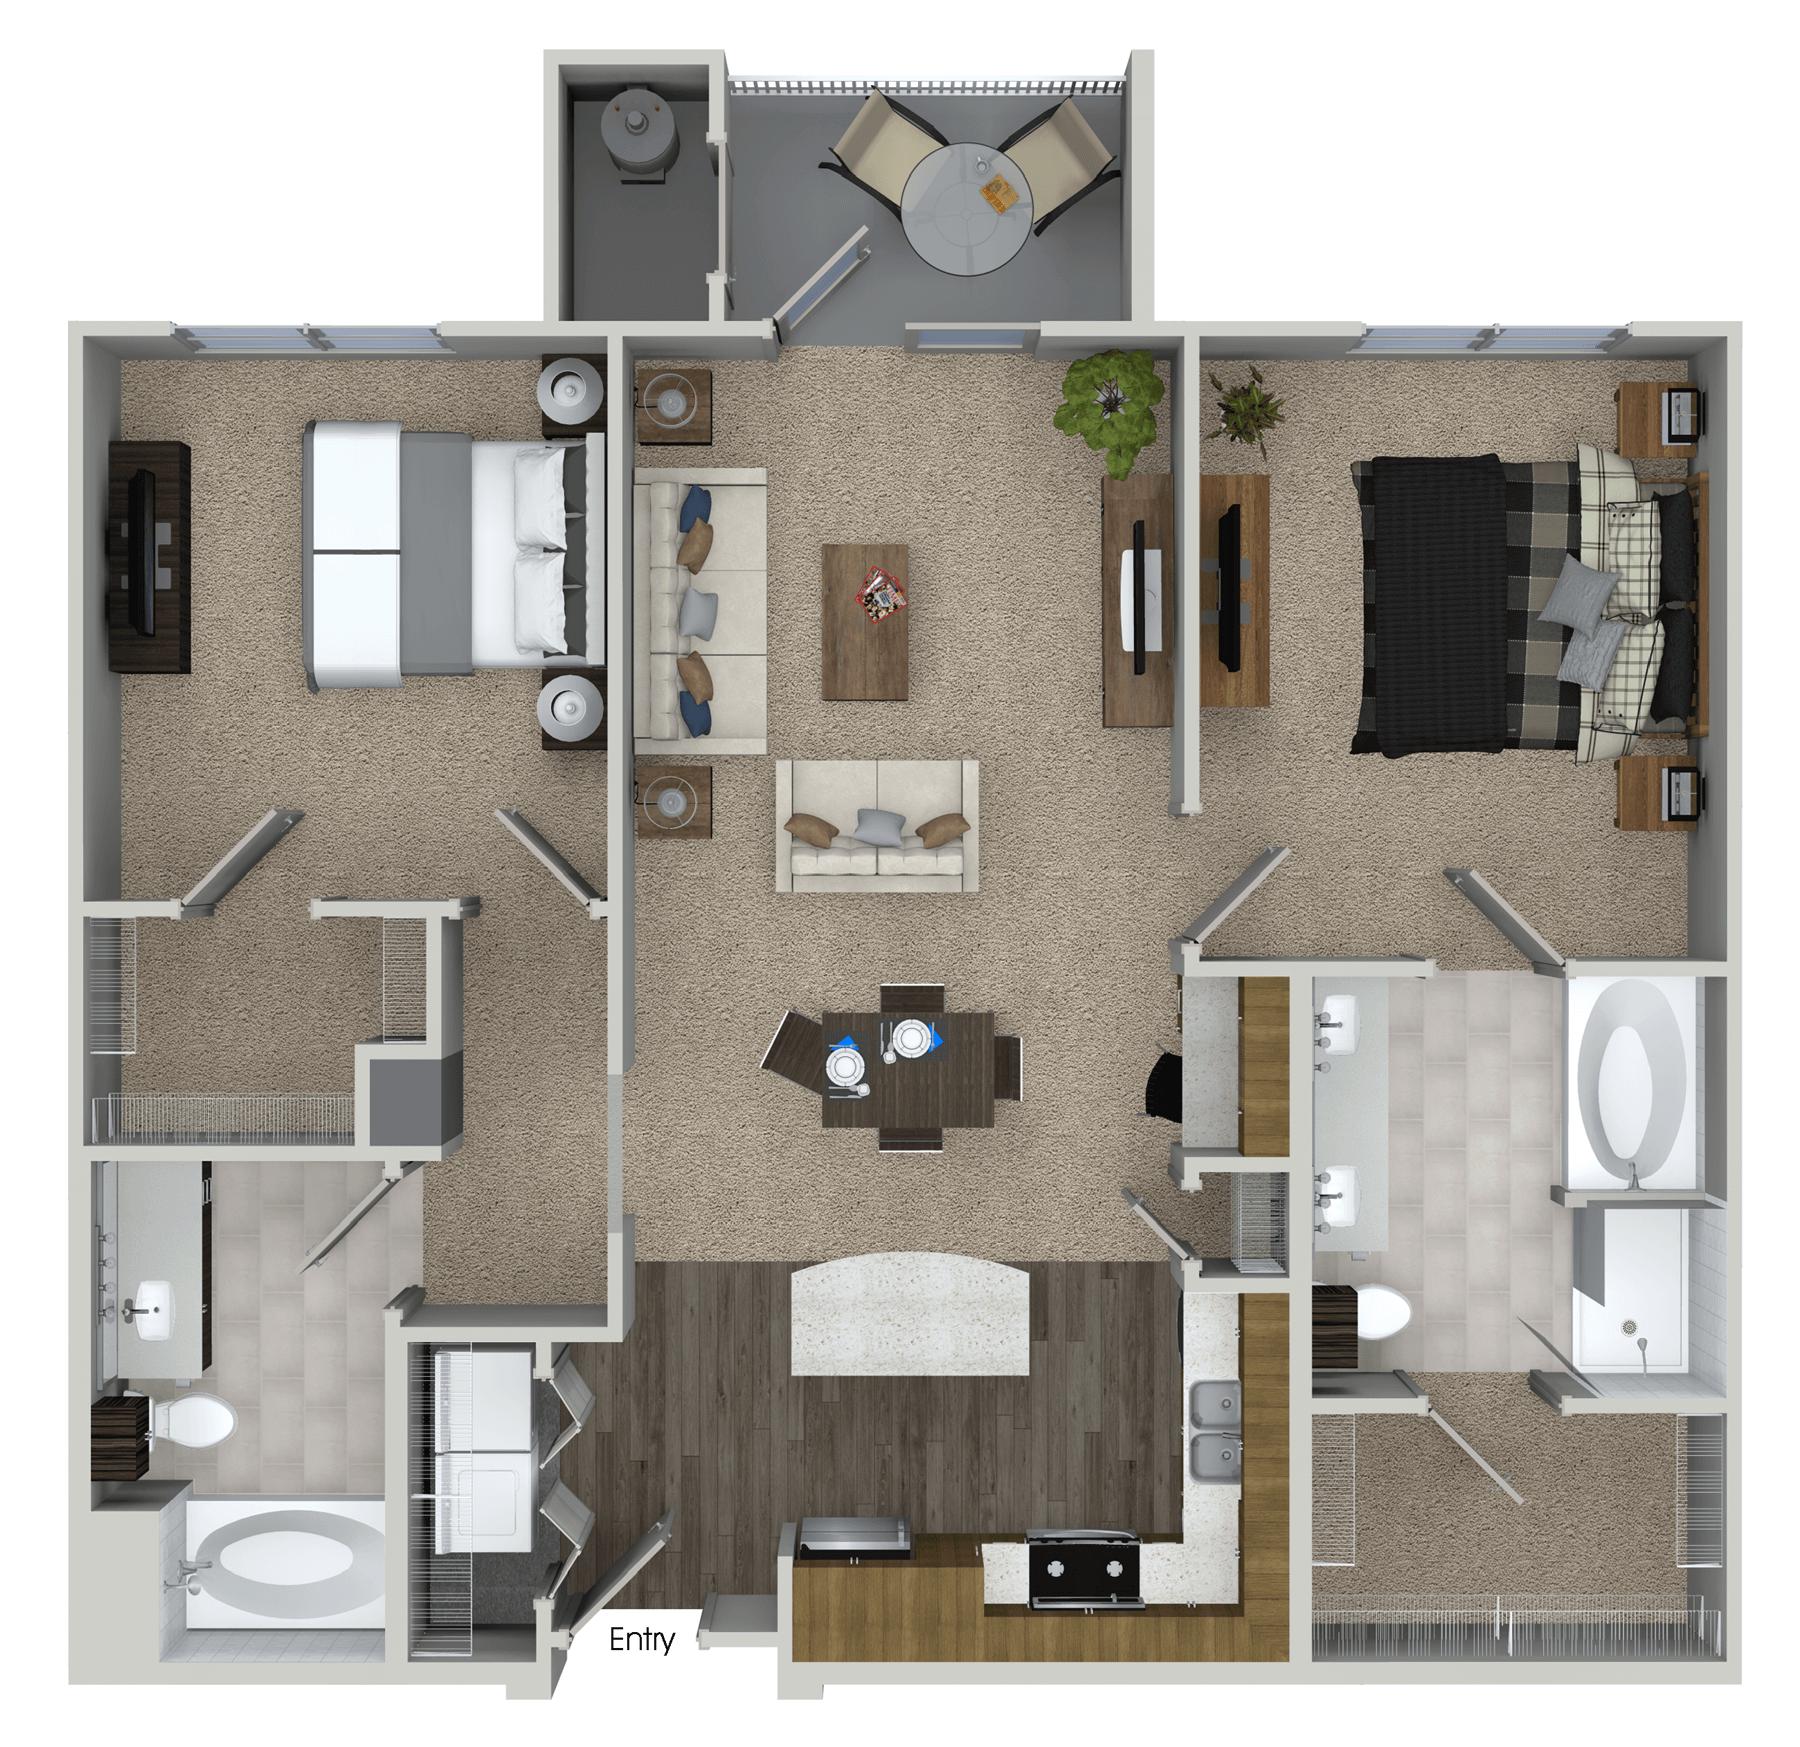 Floorplan for Apartment #3408, 2 bedroom unit at Halstead Marlborough